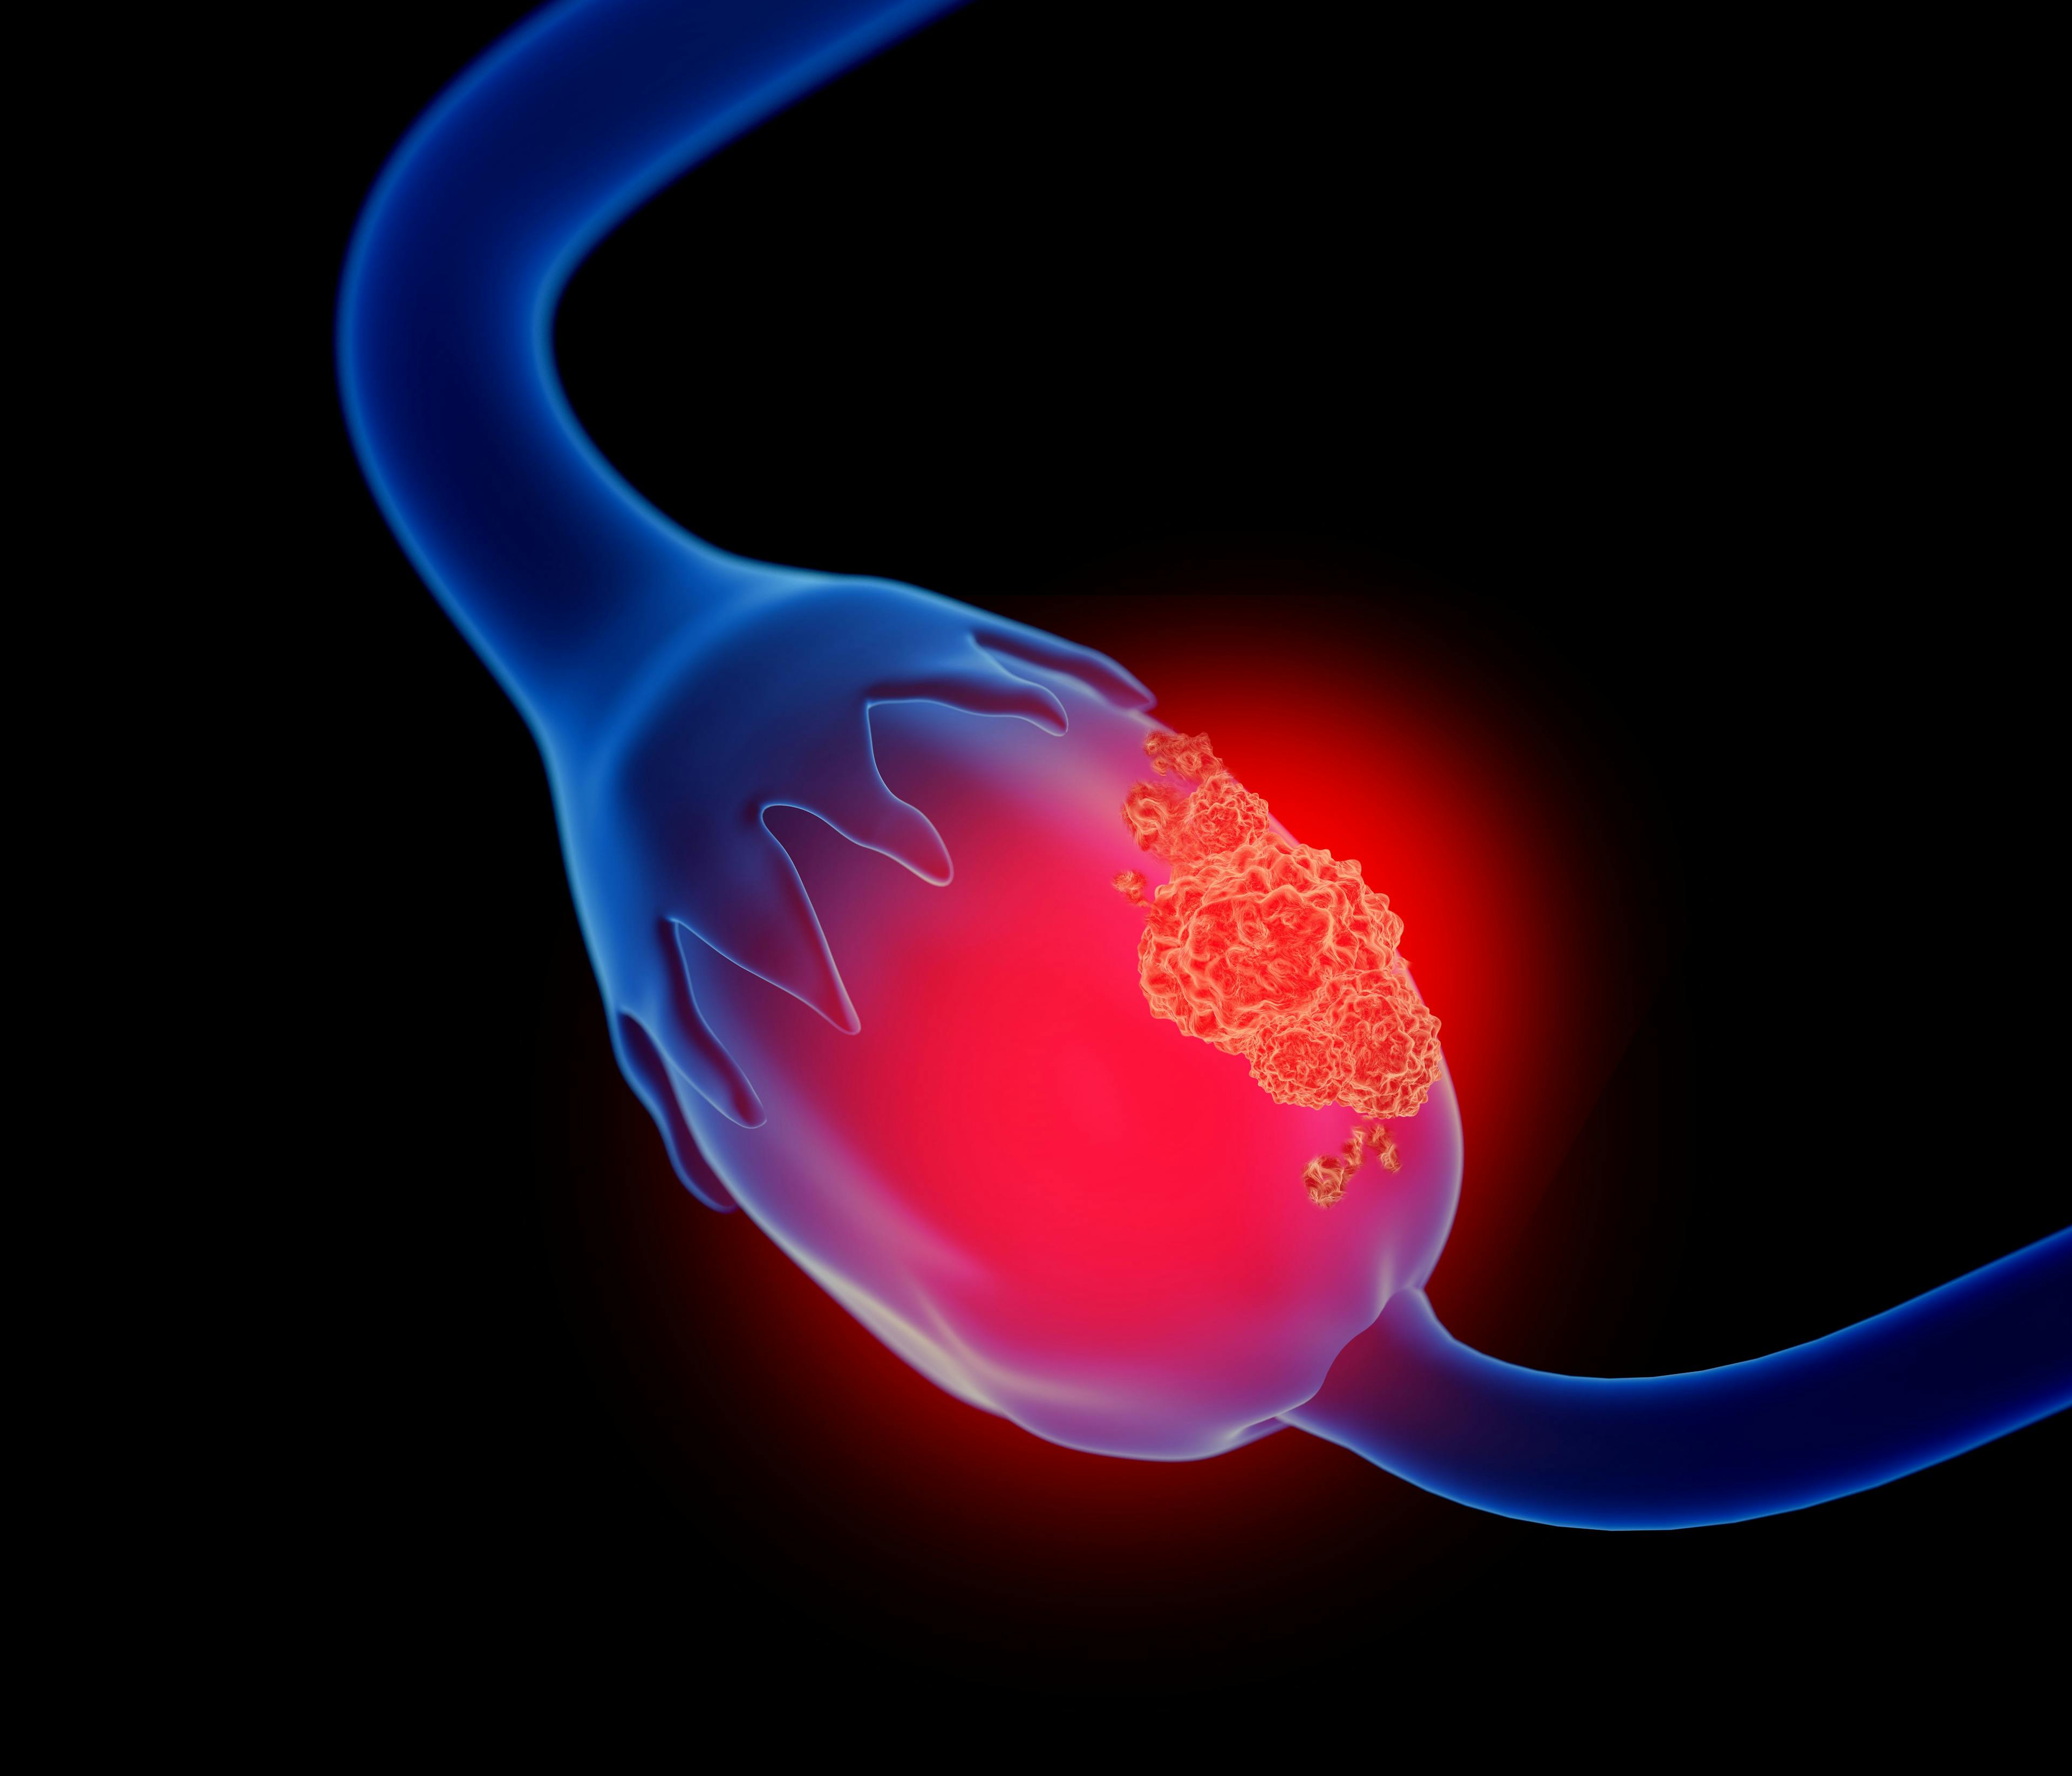 3D illustration of ovarian cancer | Image Credit: Lars Neumann - stock.adobe.com